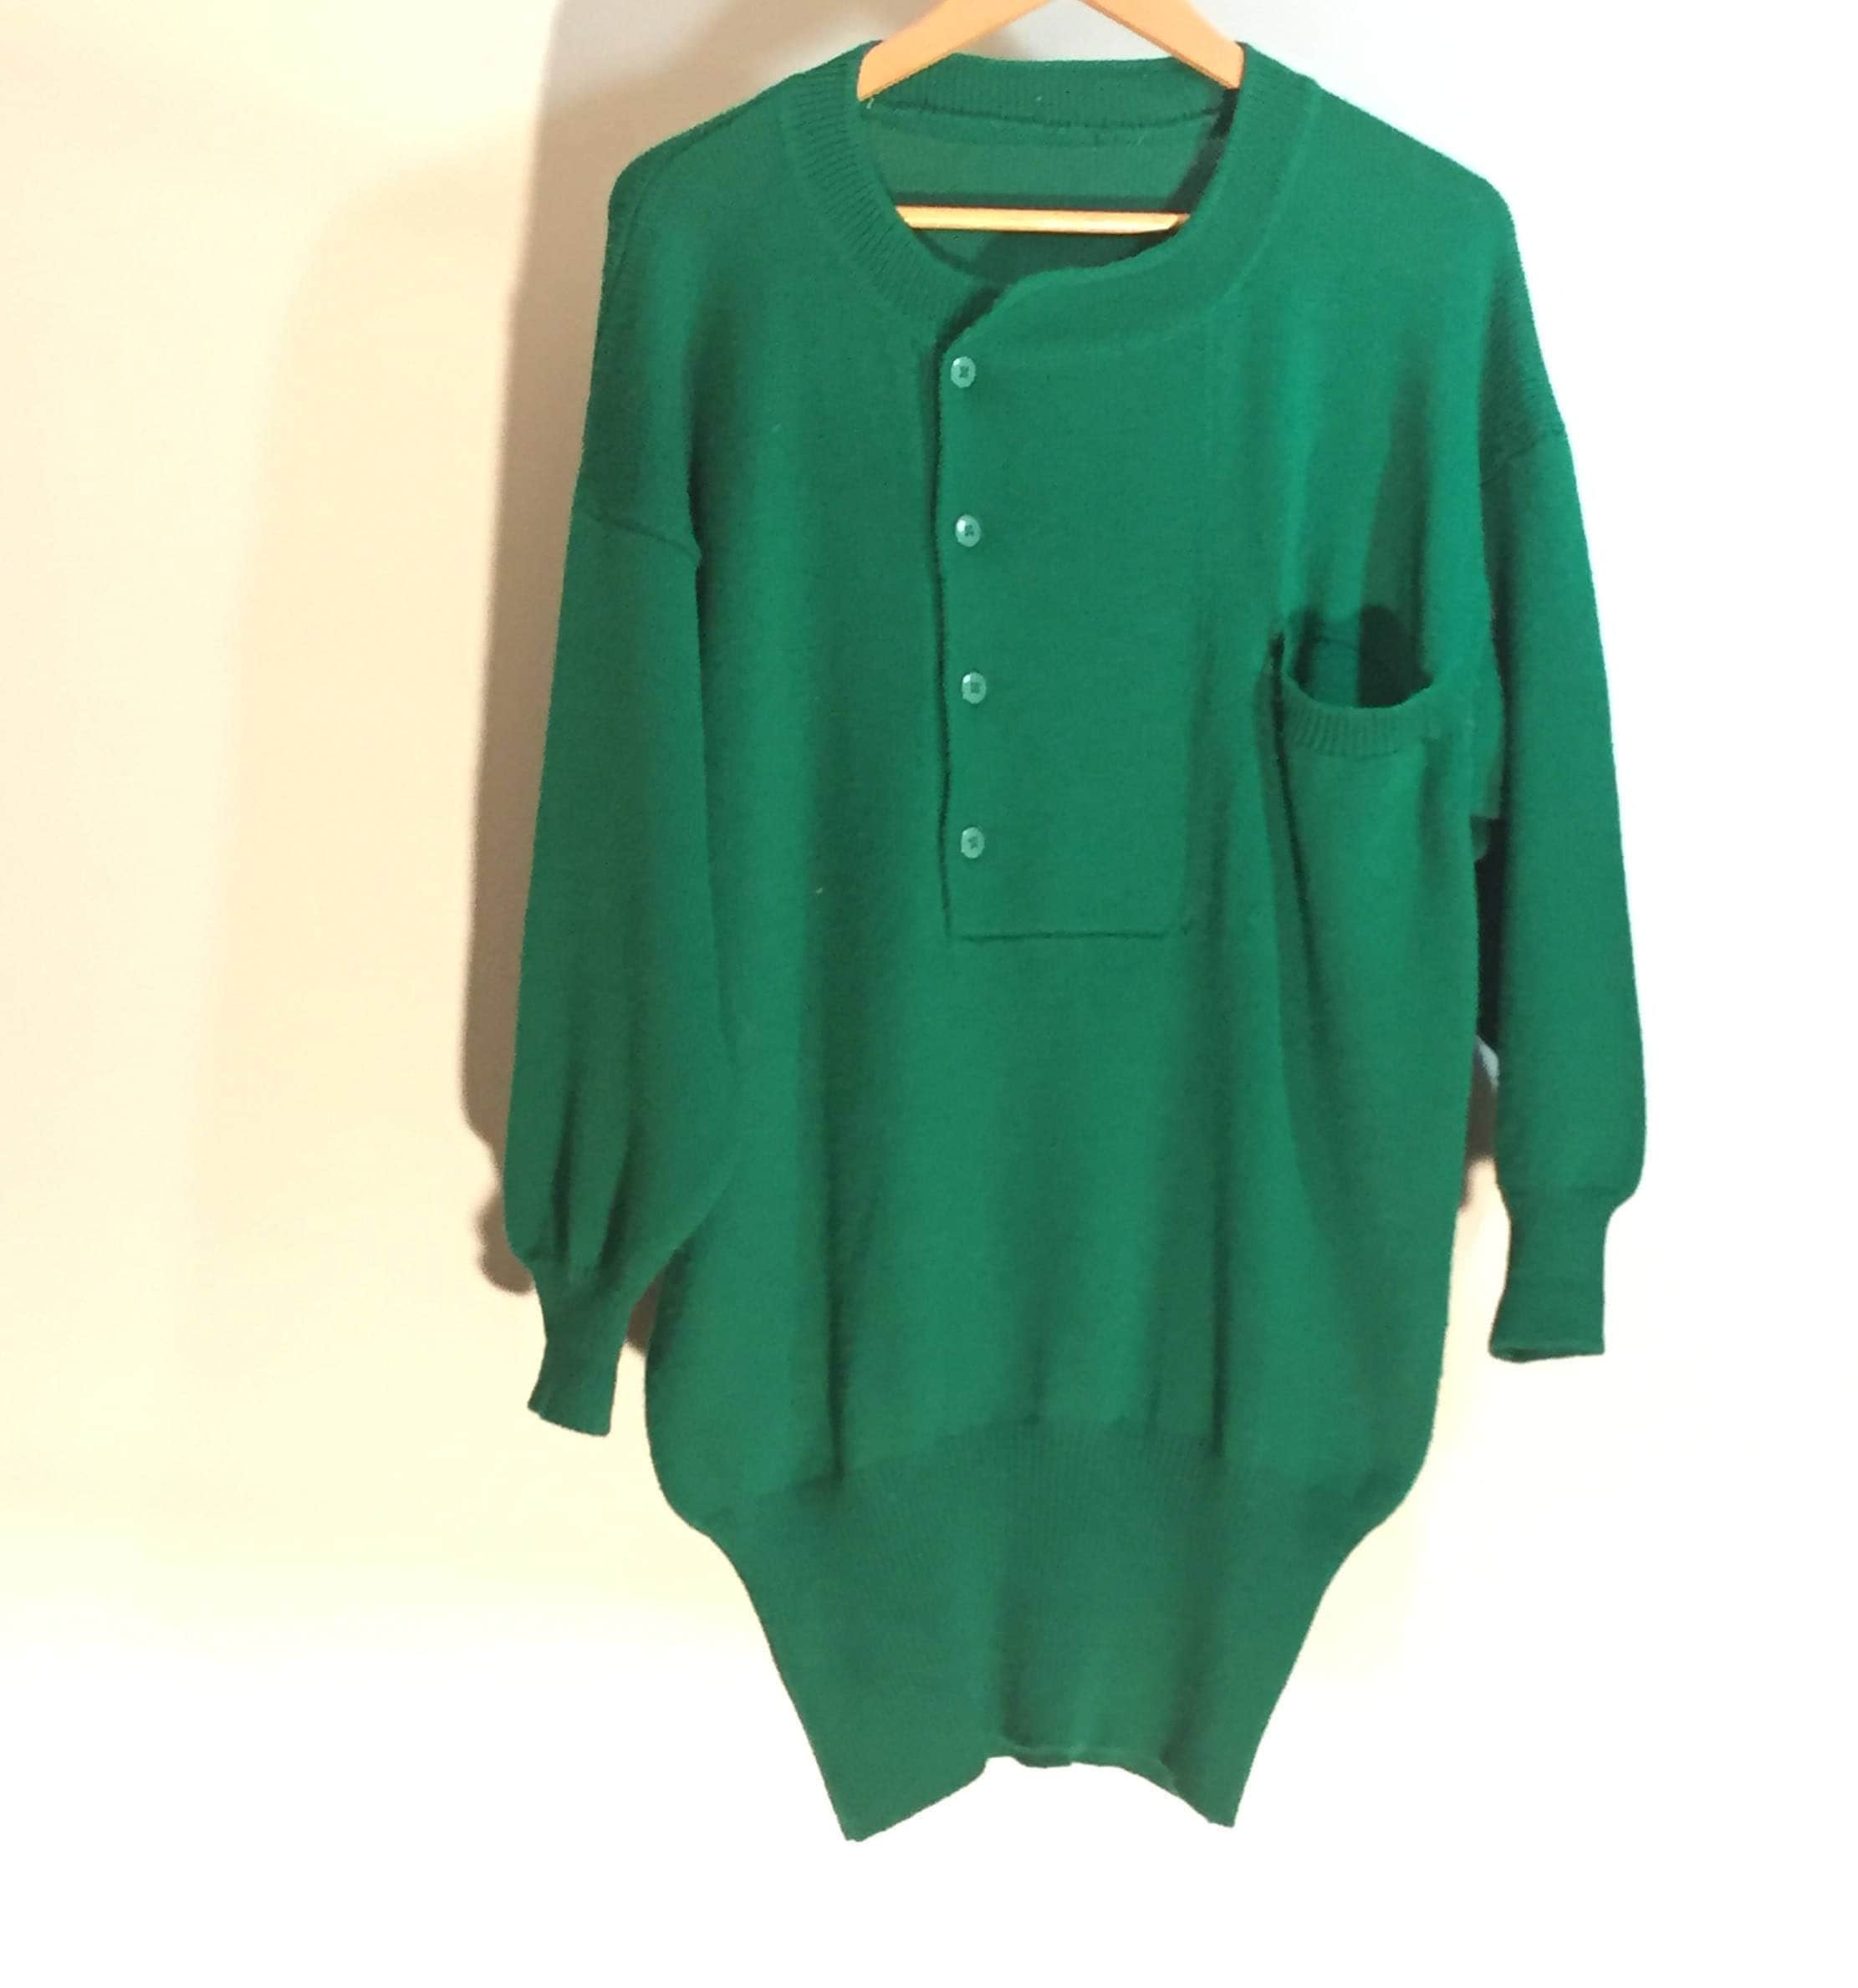 Oversized green sweater / Green sweater dress